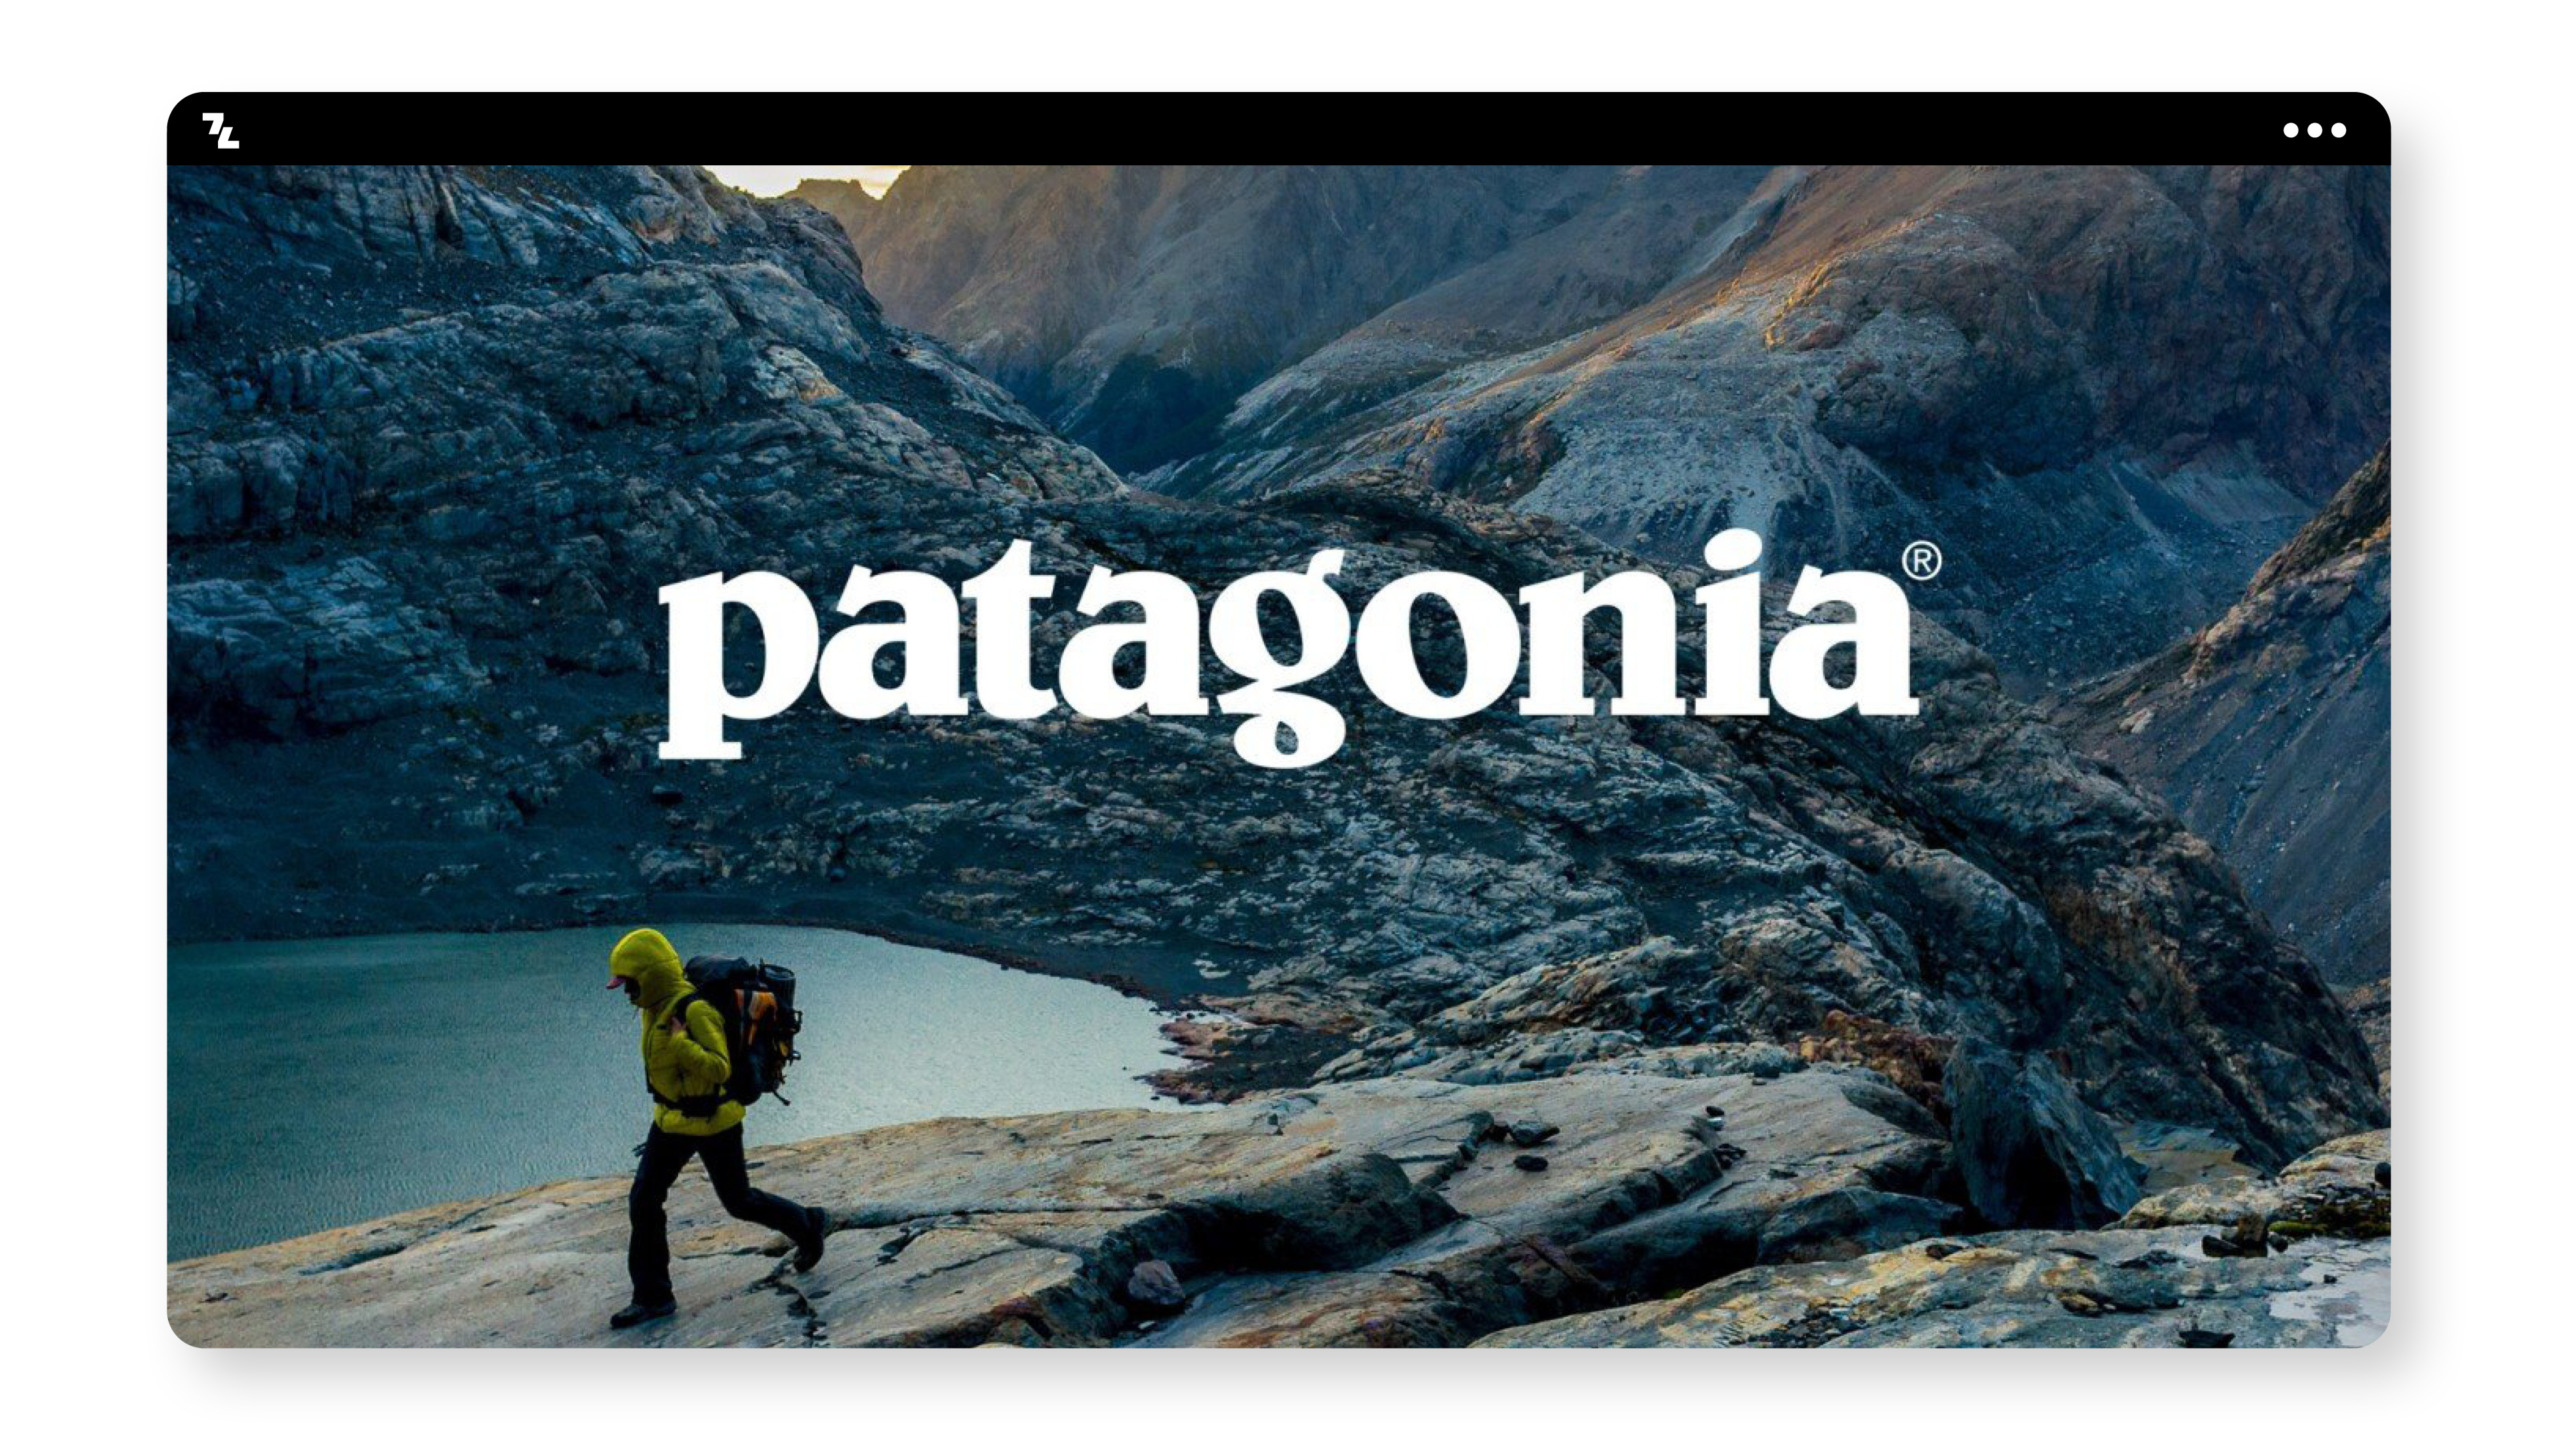 The Patagonia website showcasing sustainable branding.